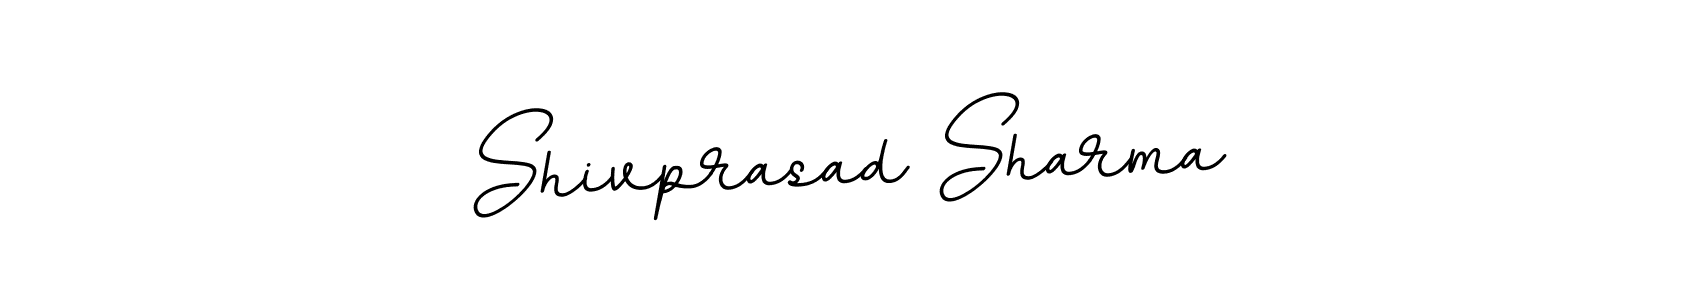 How to Draw Shivprasad Sharma signature style? BallpointsItalic-DORy9 is a latest design signature styles for name Shivprasad Sharma. Shivprasad Sharma signature style 11 images and pictures png